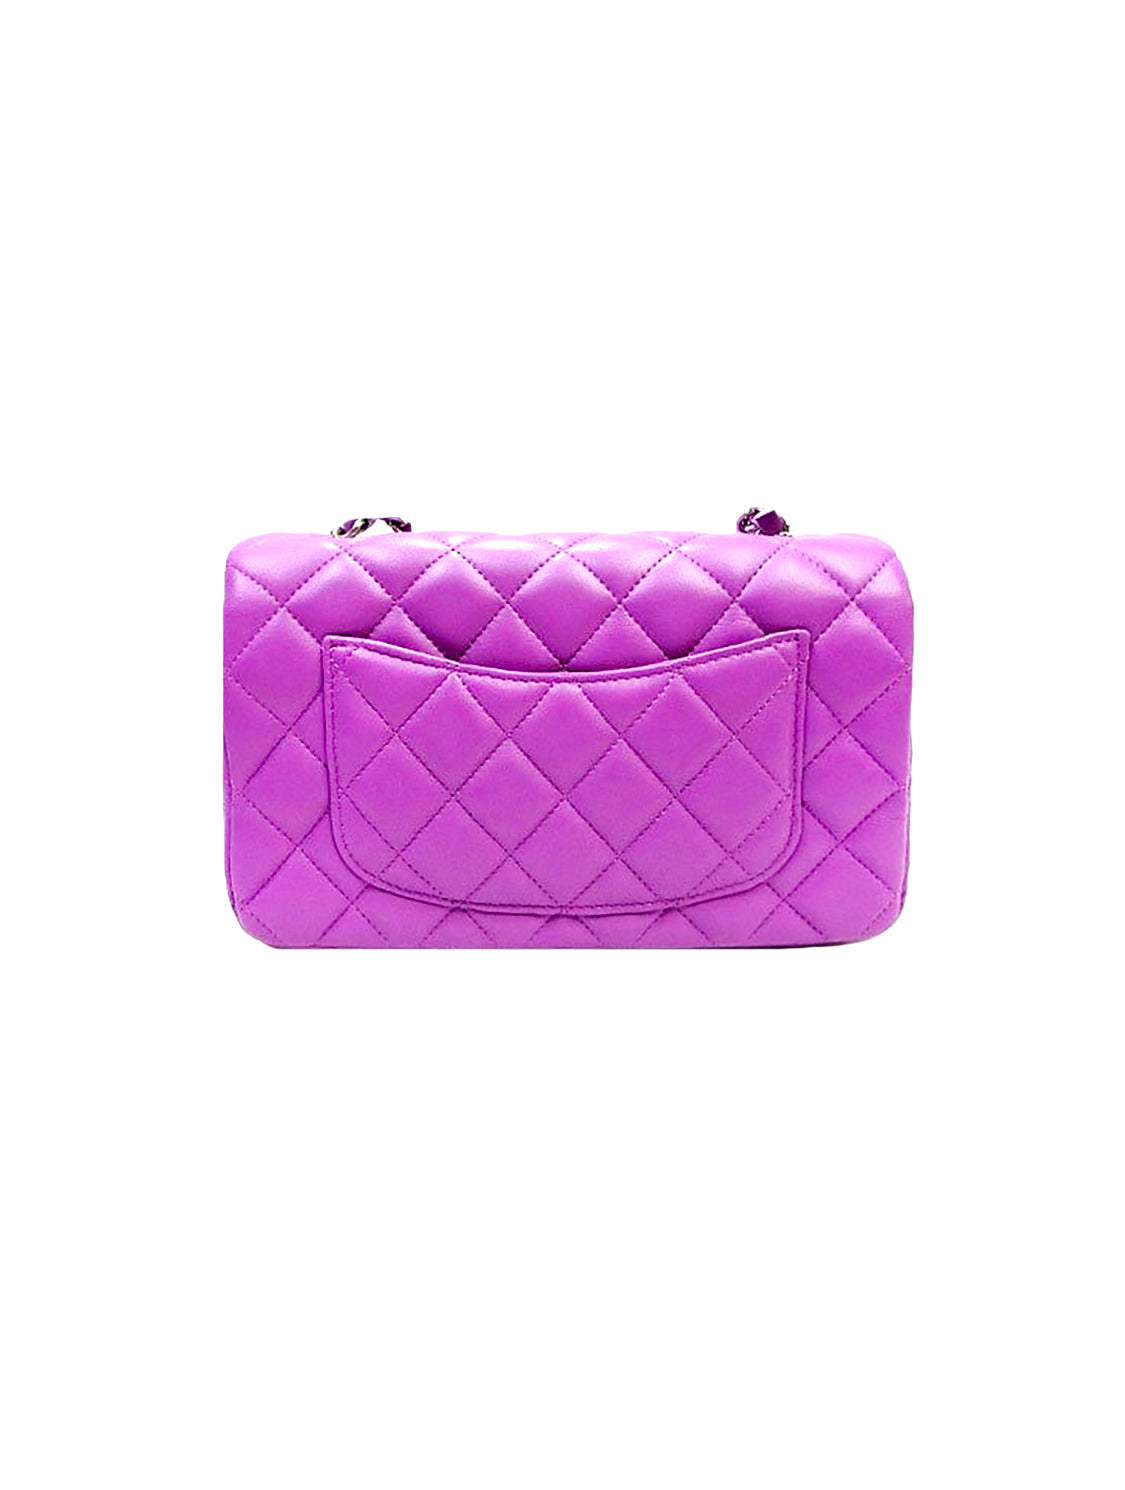 Chanel 2019 Purple Lamb Leather Flap